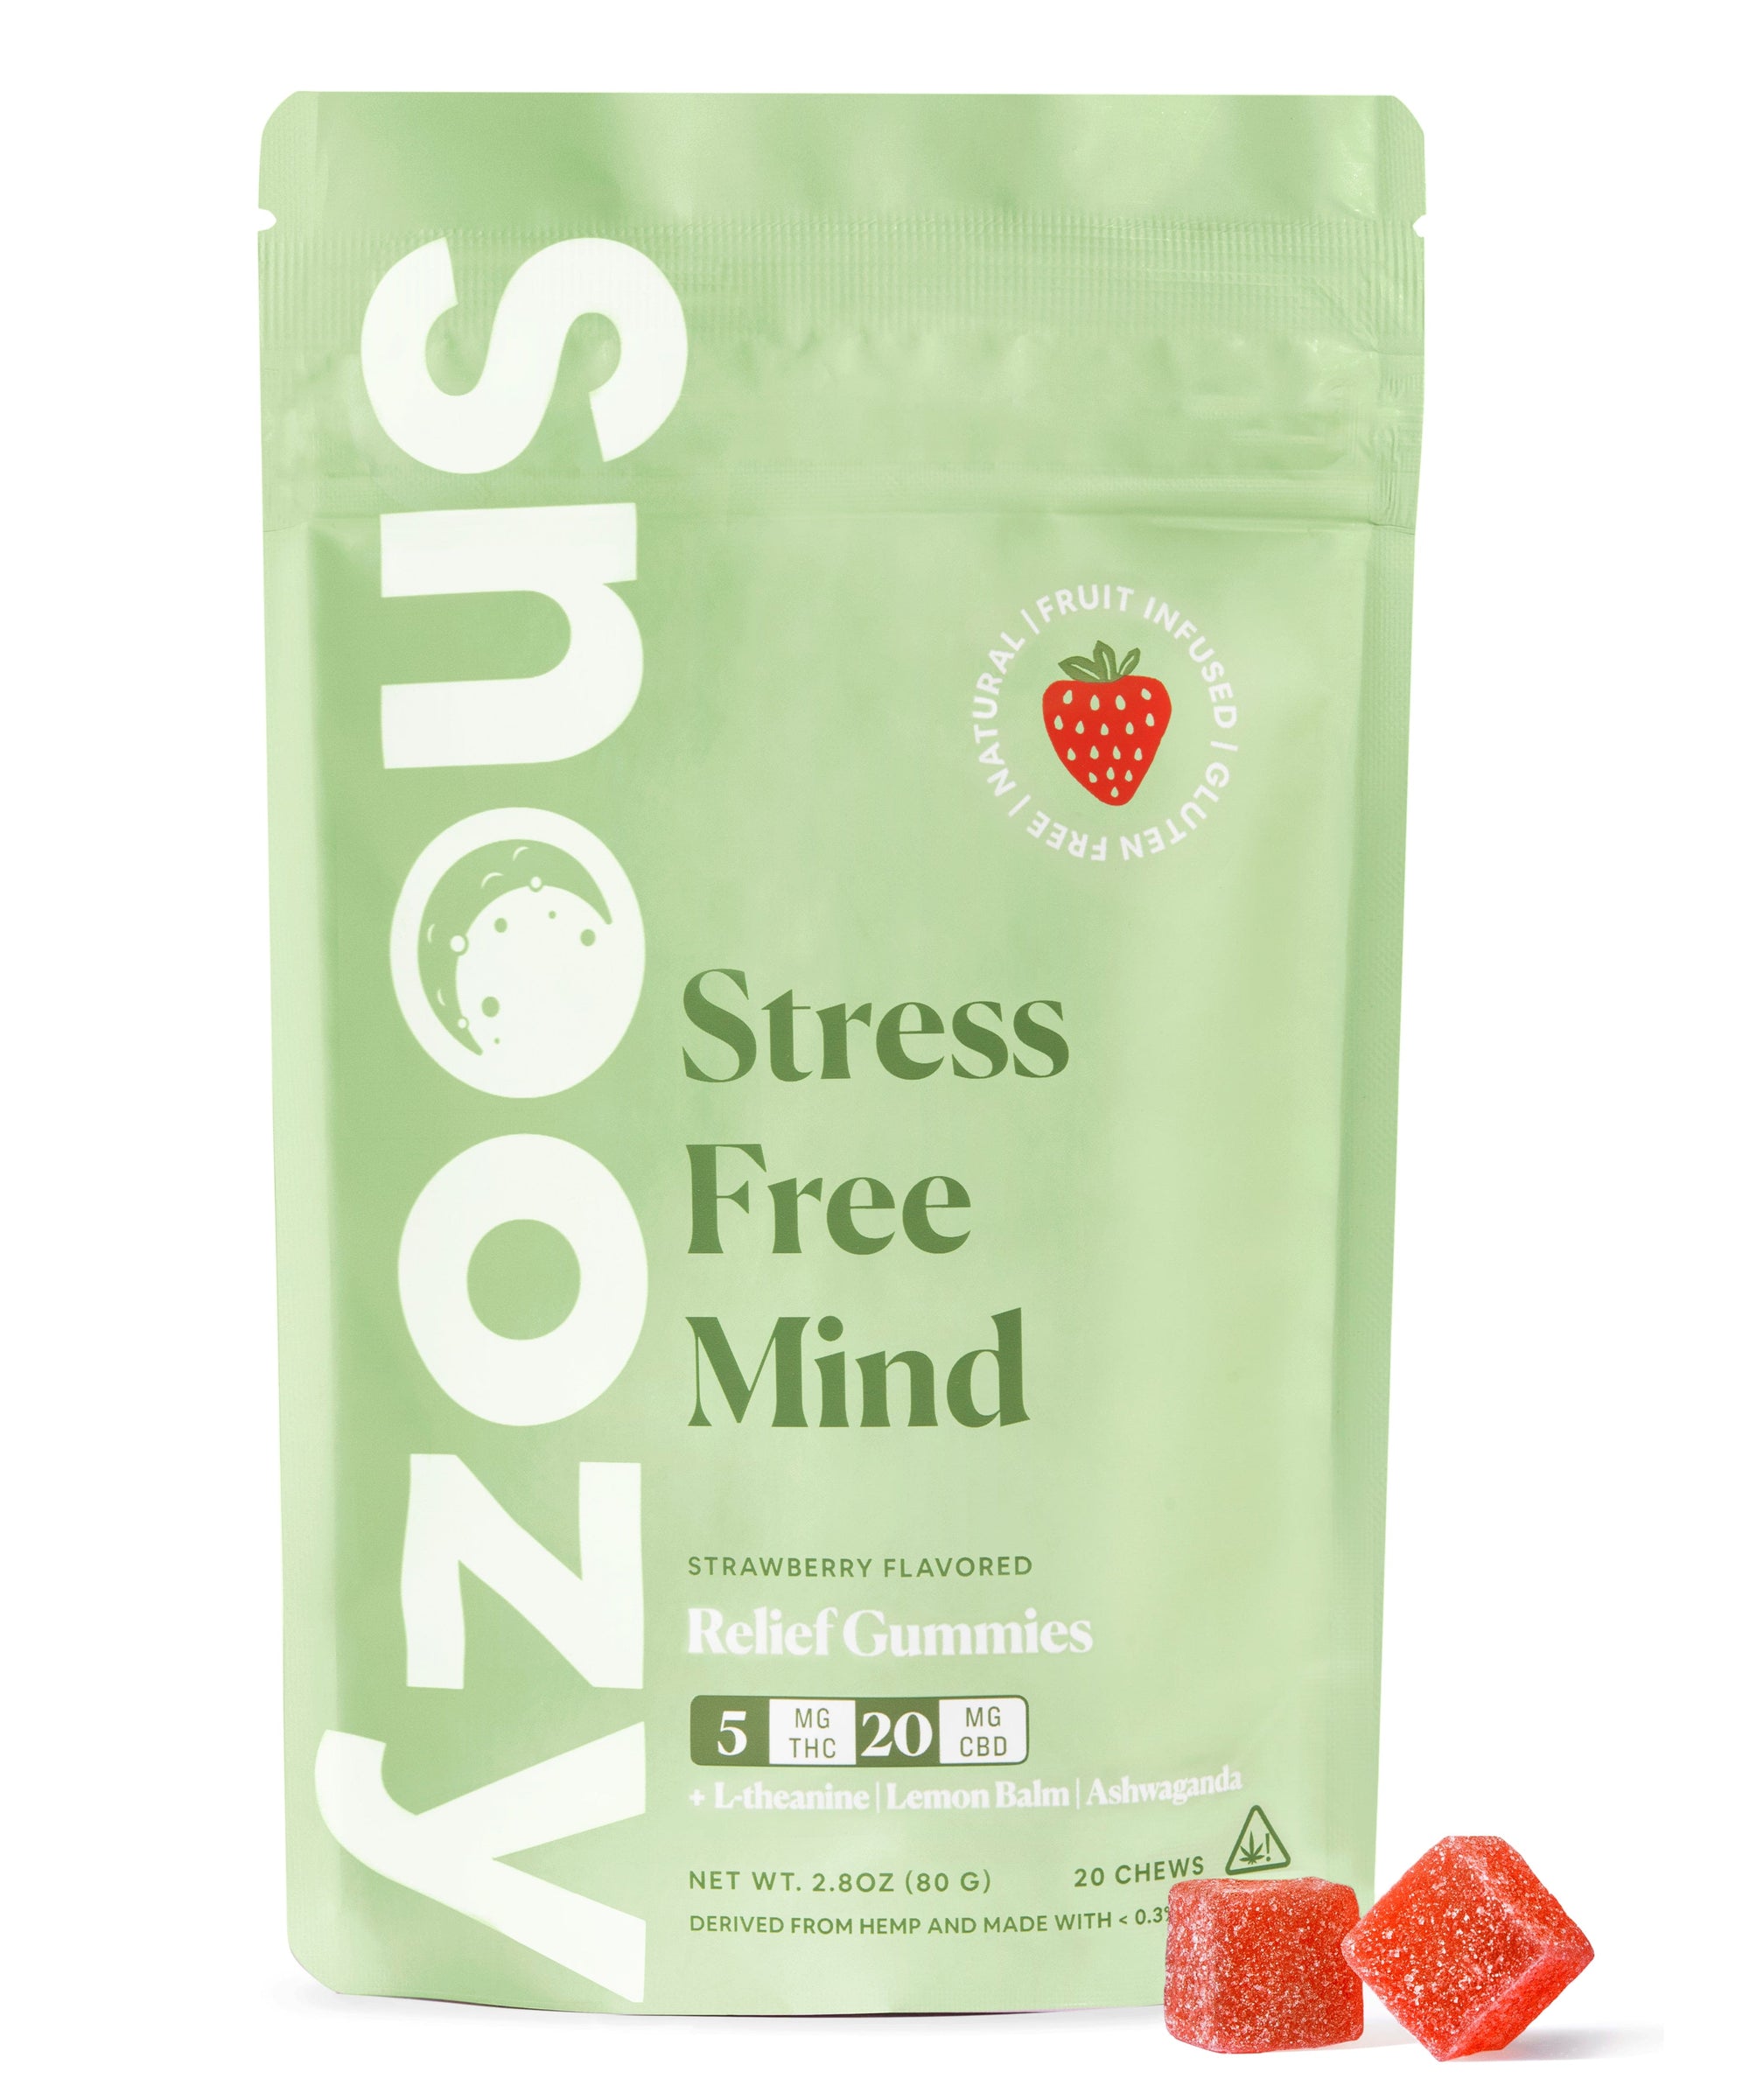 Stress Free Mind: Relief Gummies - Wholesale